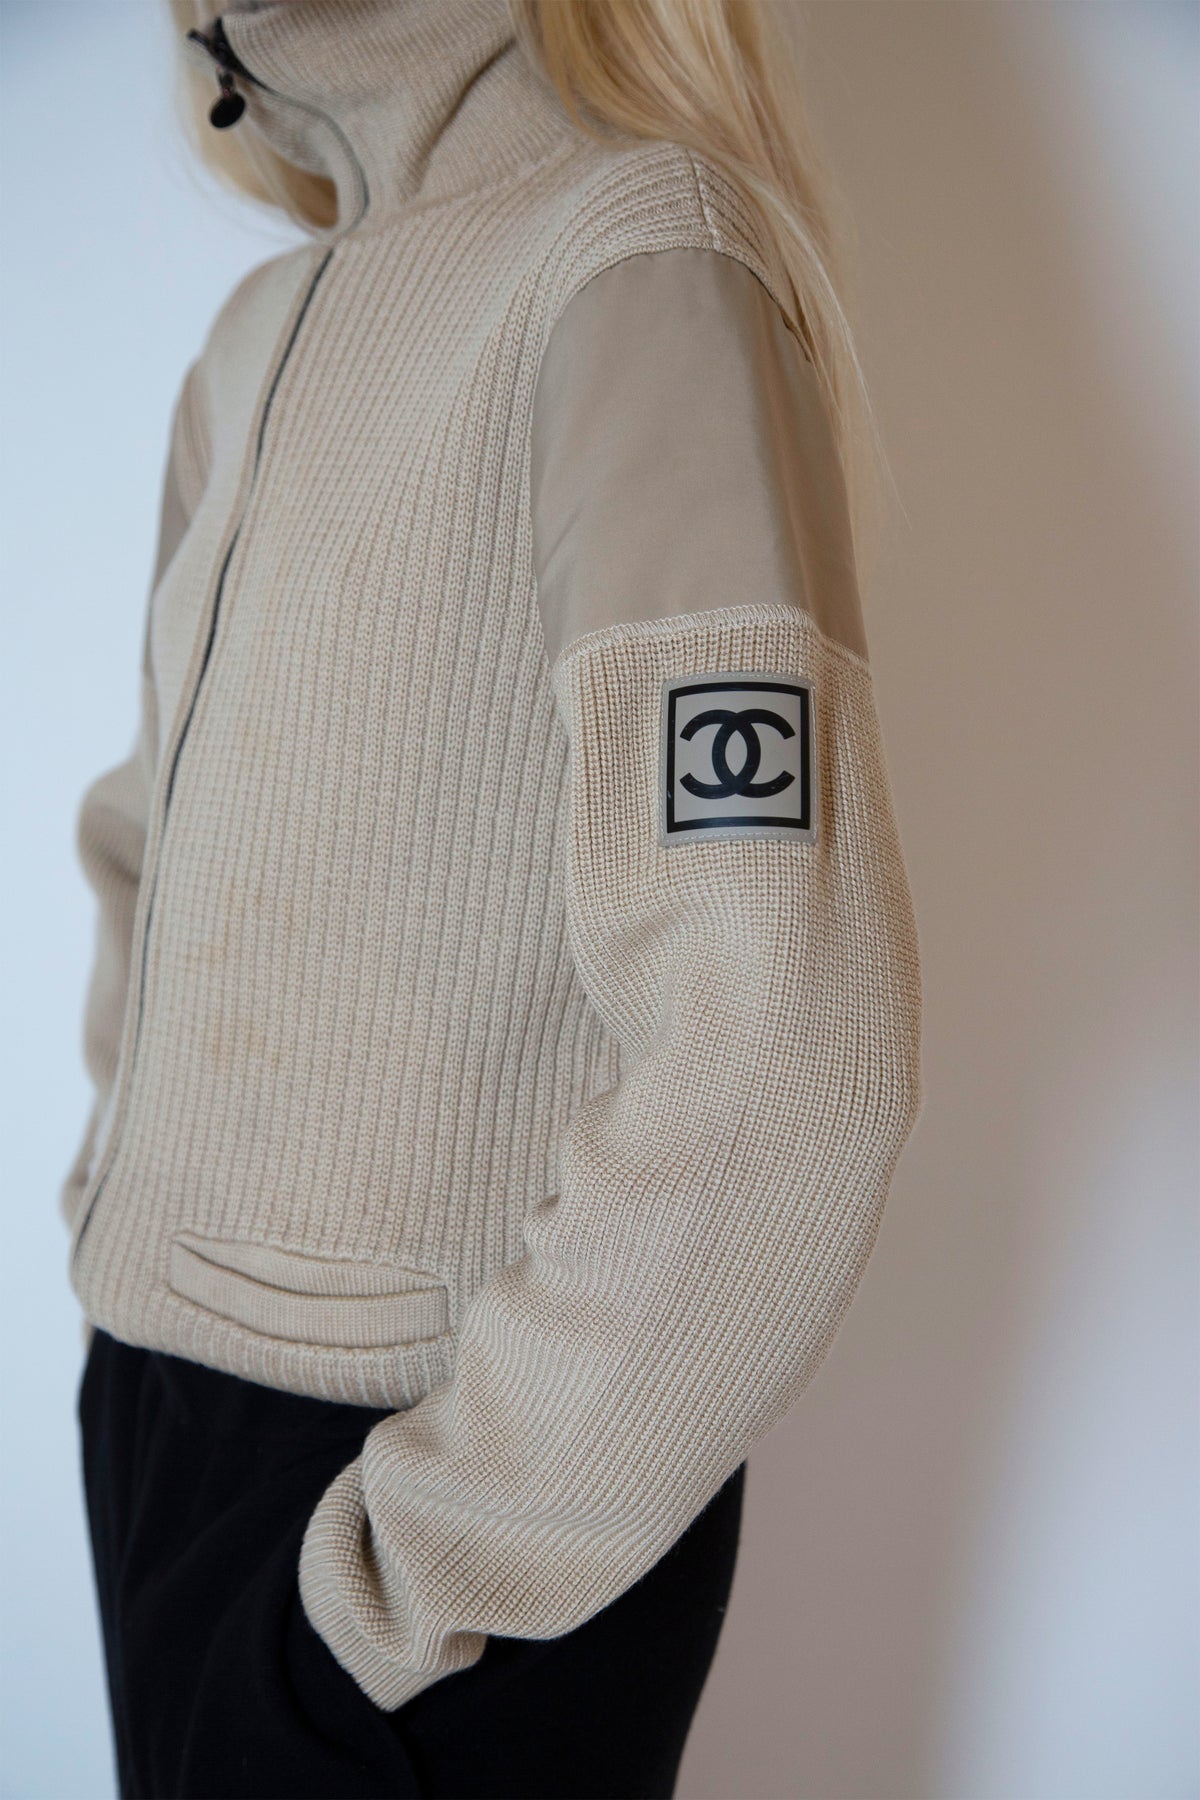 Chanel sweater / cardigan